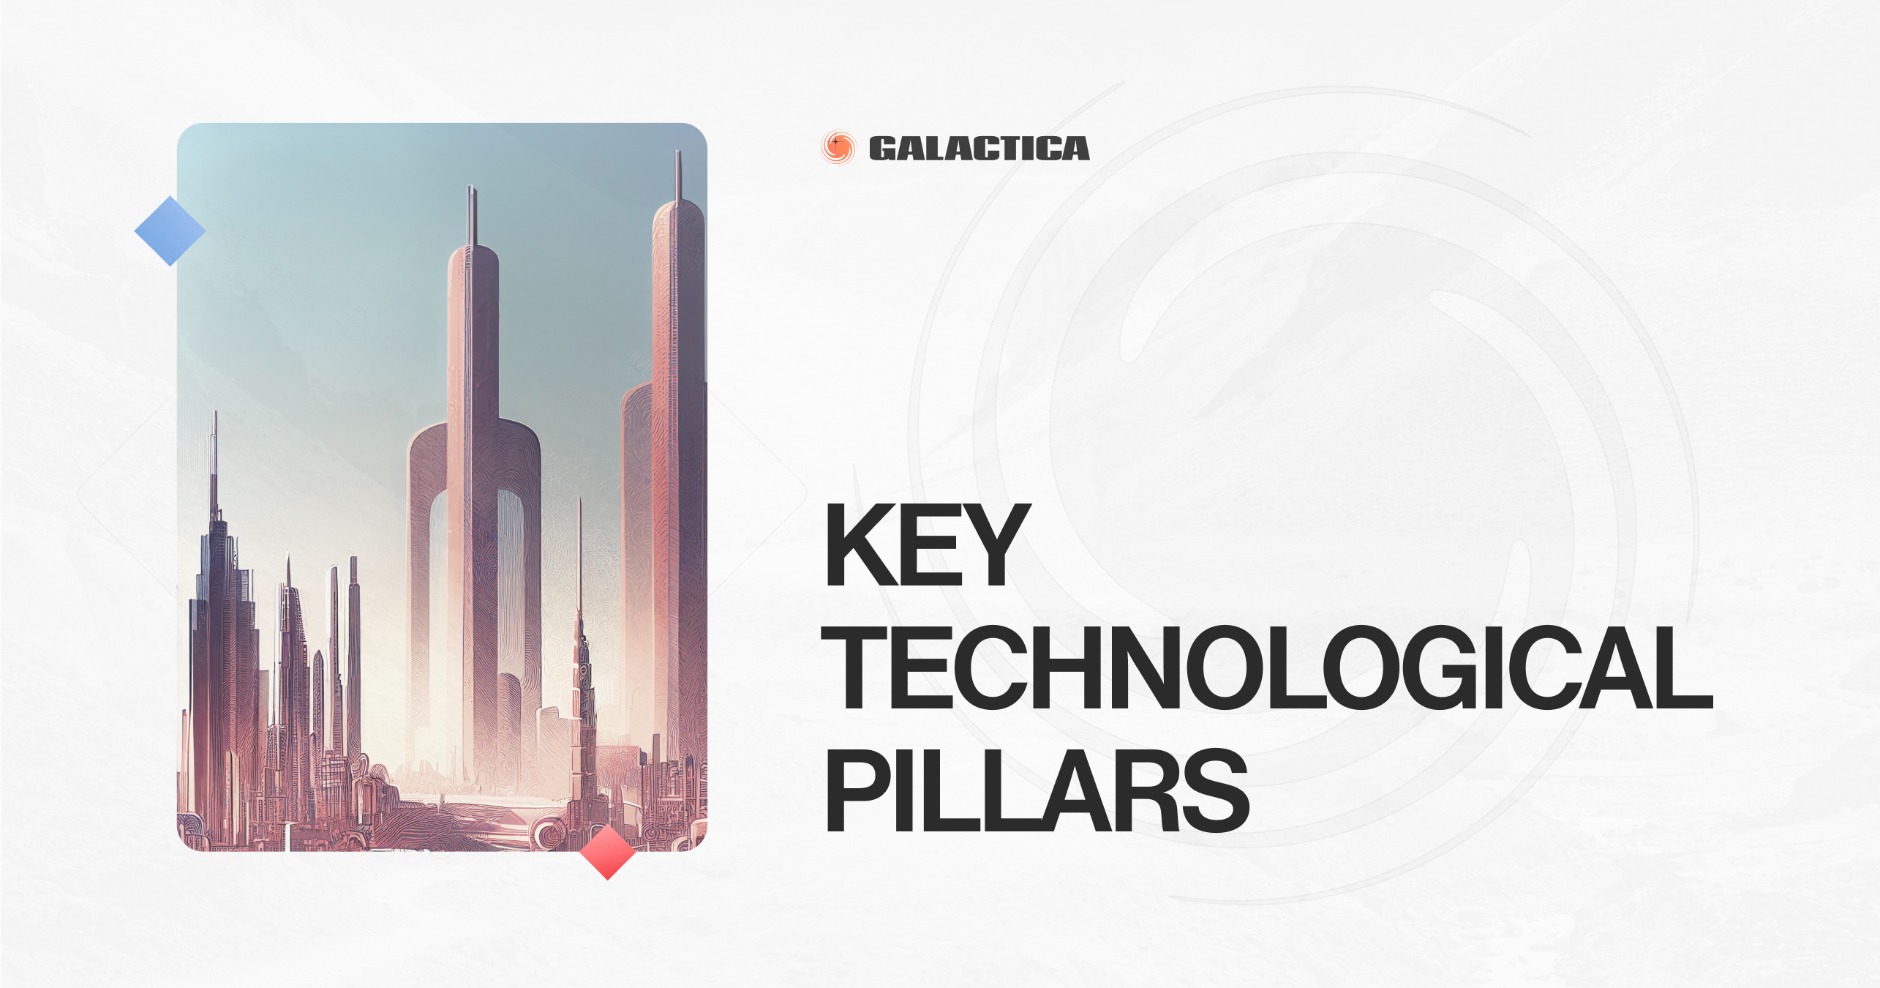 Galactica Network’s Key Technological Pillars